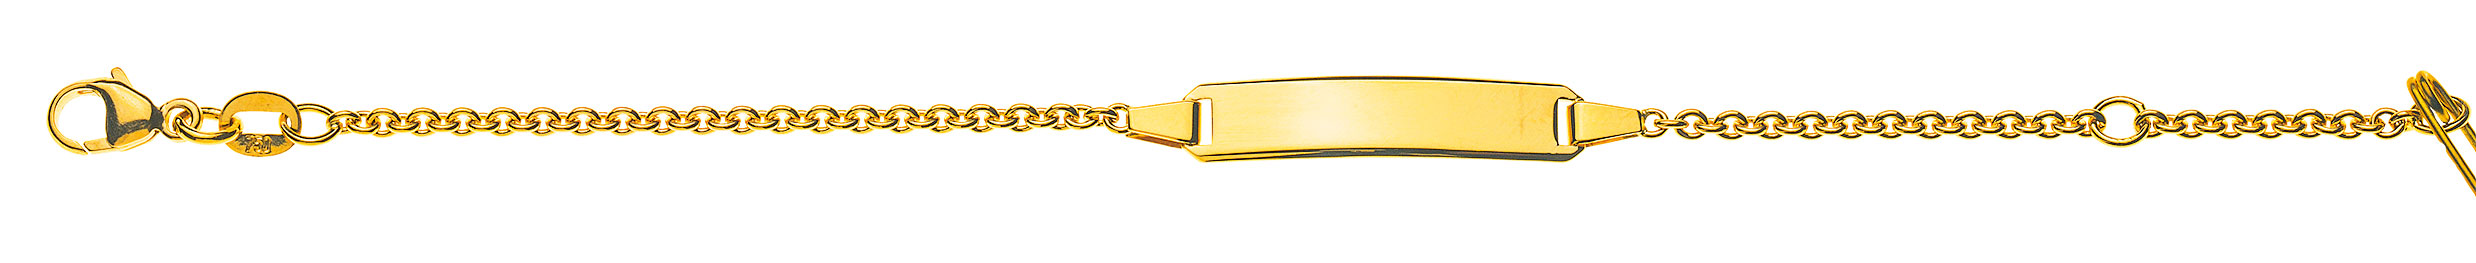 AURONOS Prestige ID bracelet 18k yellow gold round anchor chain 16cm